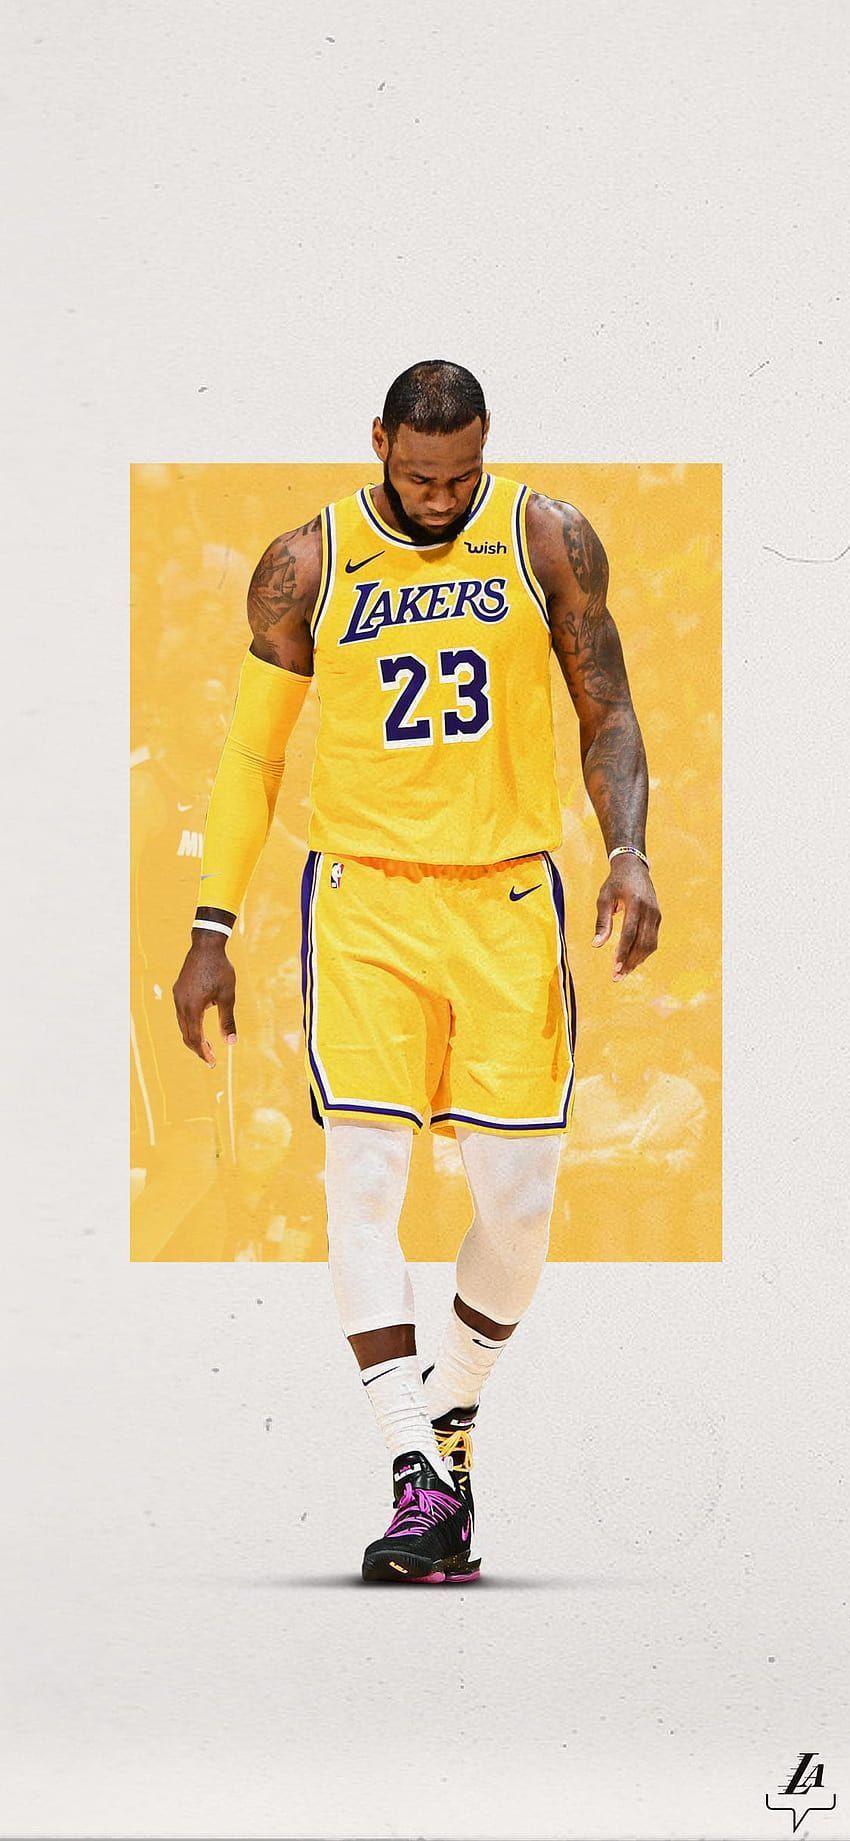 Lebron James wearing Lakers uniform and walking on court - Lebron James